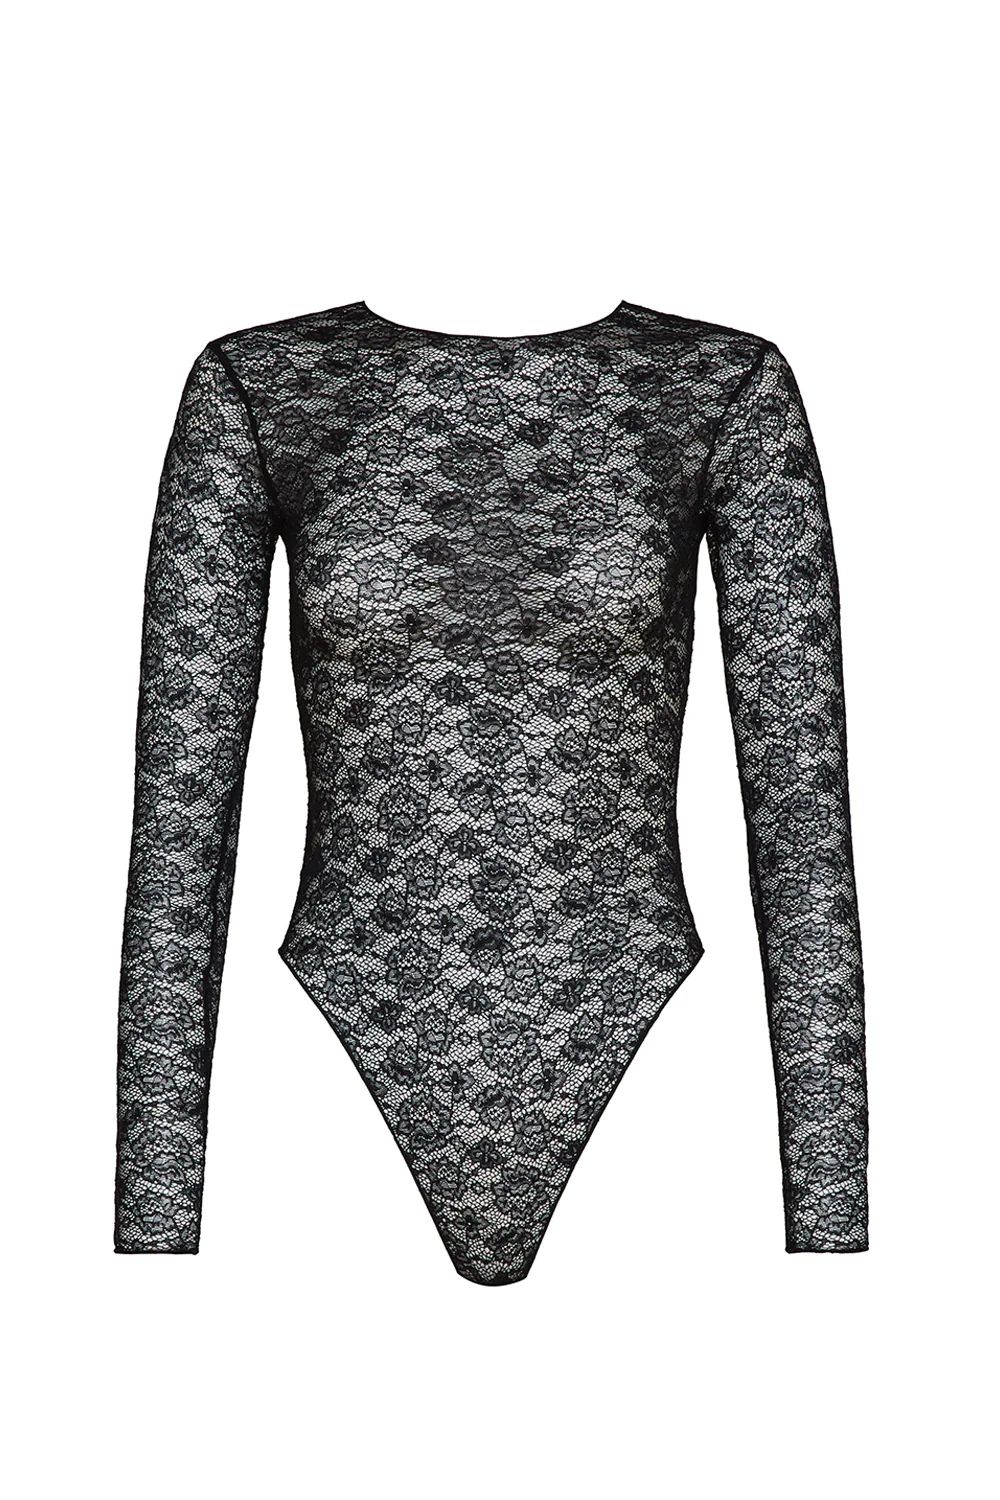 lace odette bodysuit in black
          








  
  
    
    
    
      if(typeof isGwHelperL... | Tropic of C